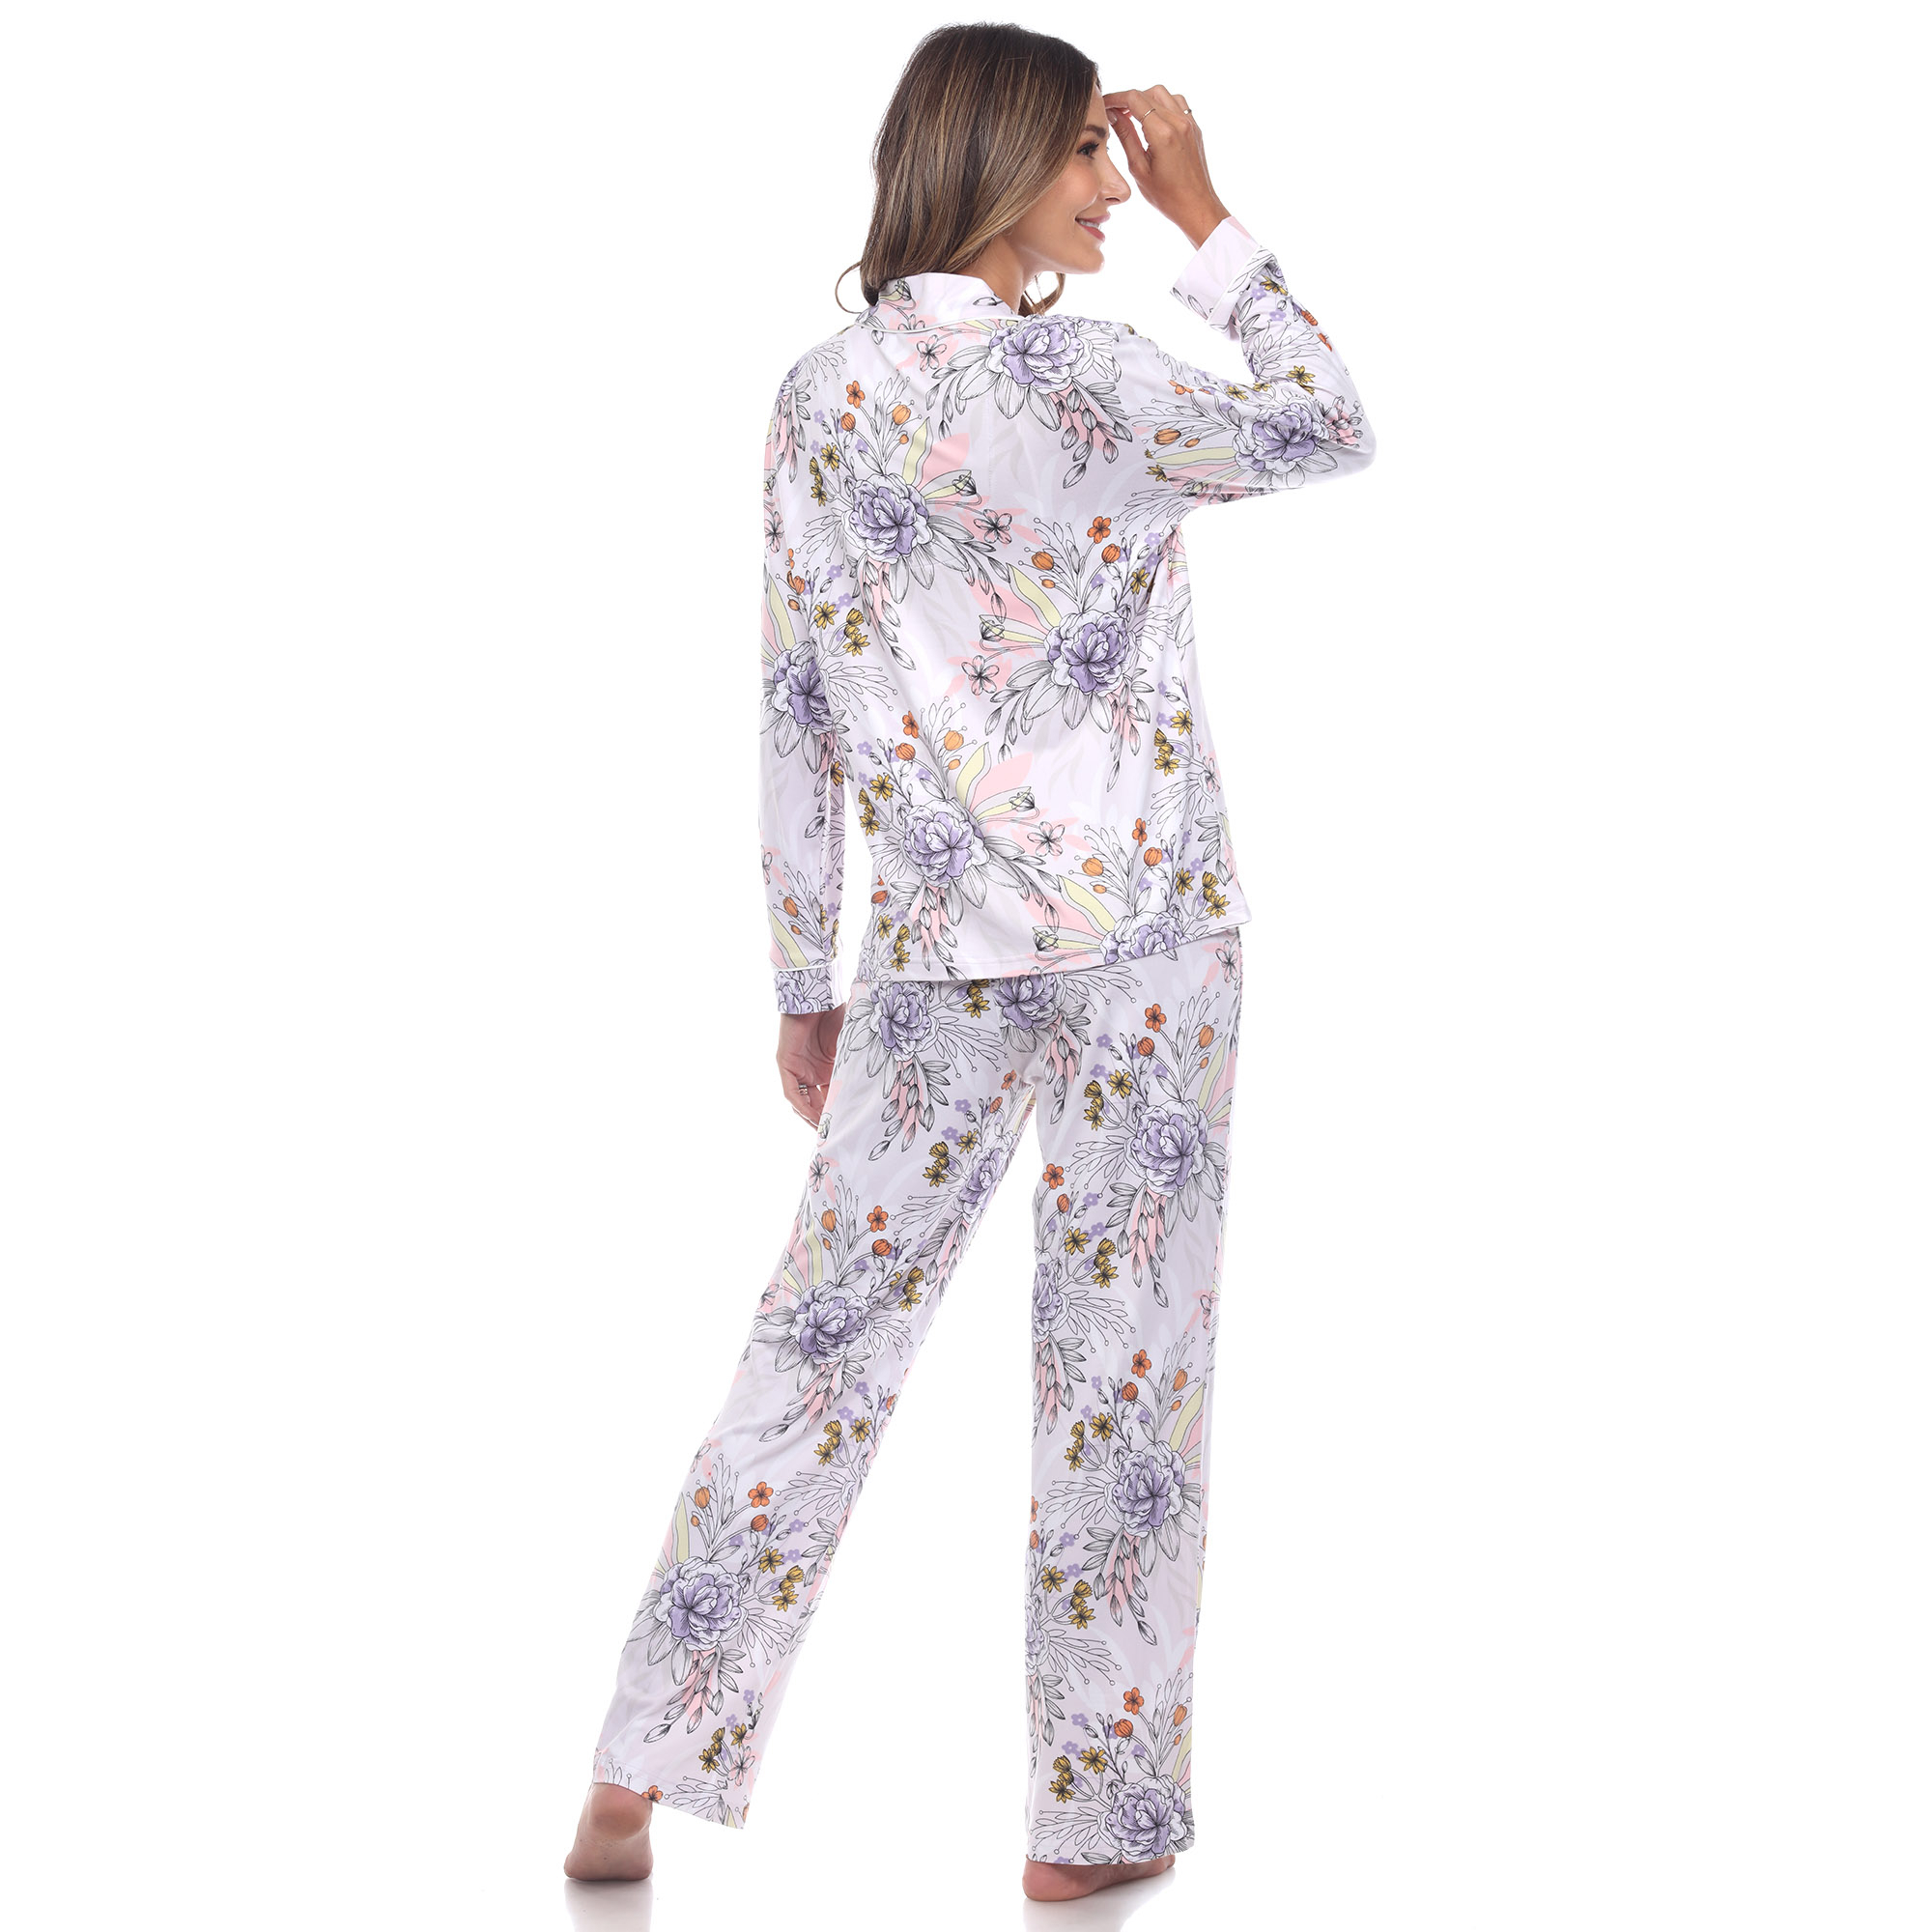 White Mark Women's Long Sleeve Floral Pajama Set - Rose, 3X